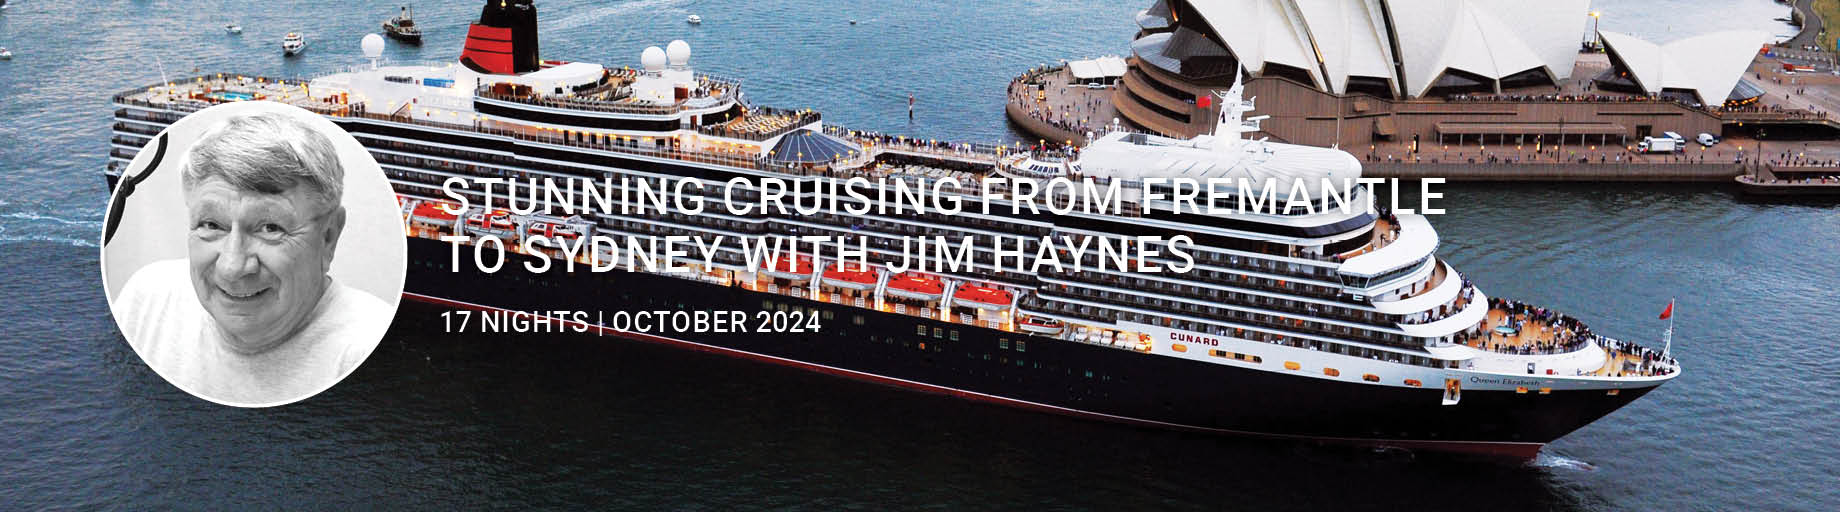 History & Heritage Tour & Cruise of Australia with Jim Haynes